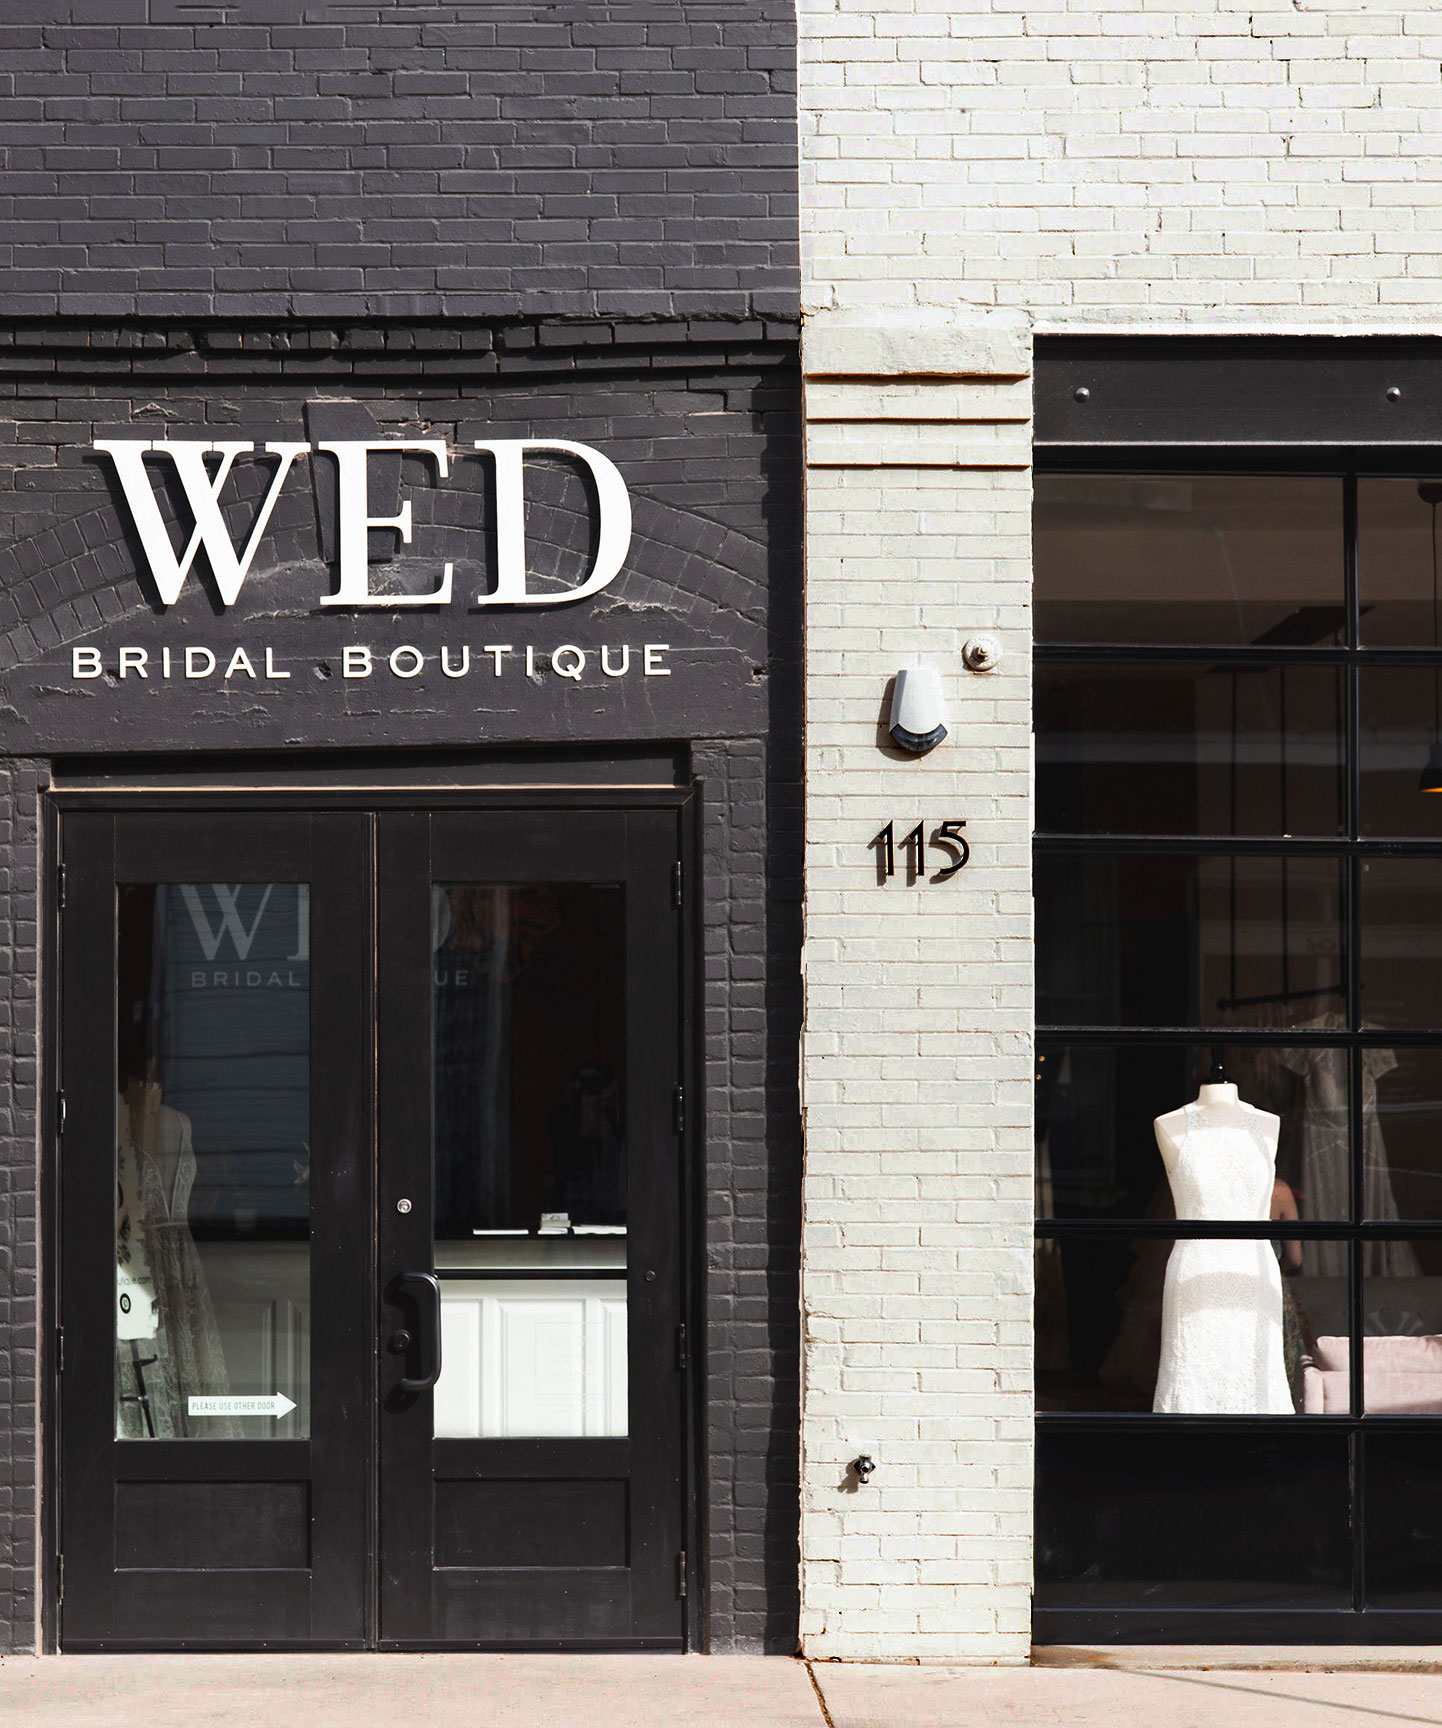 konradryan | WED Bridal Boutique | photo